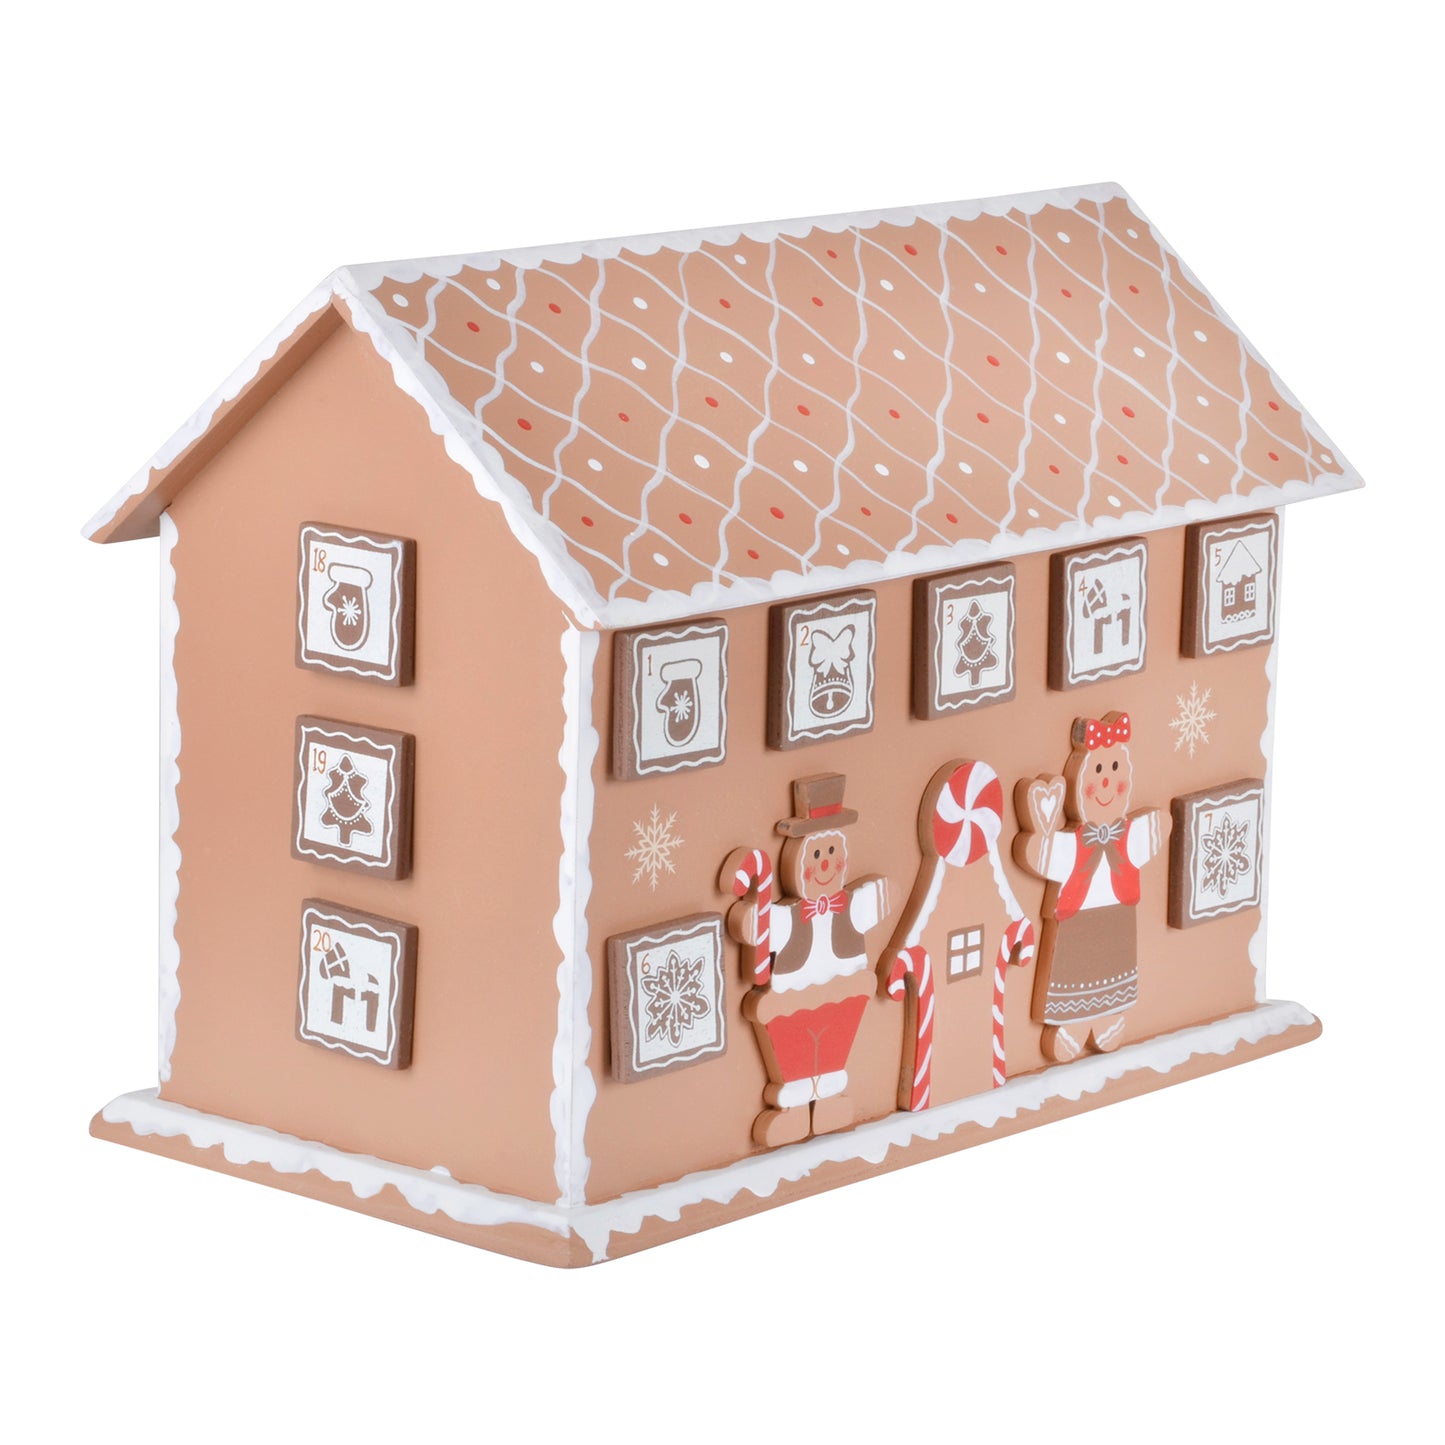 Mr Crimbo Novelty Gingerbread House Wooden Advent Calendar - MrCrimbo.co.uk -XS4506 - -advent